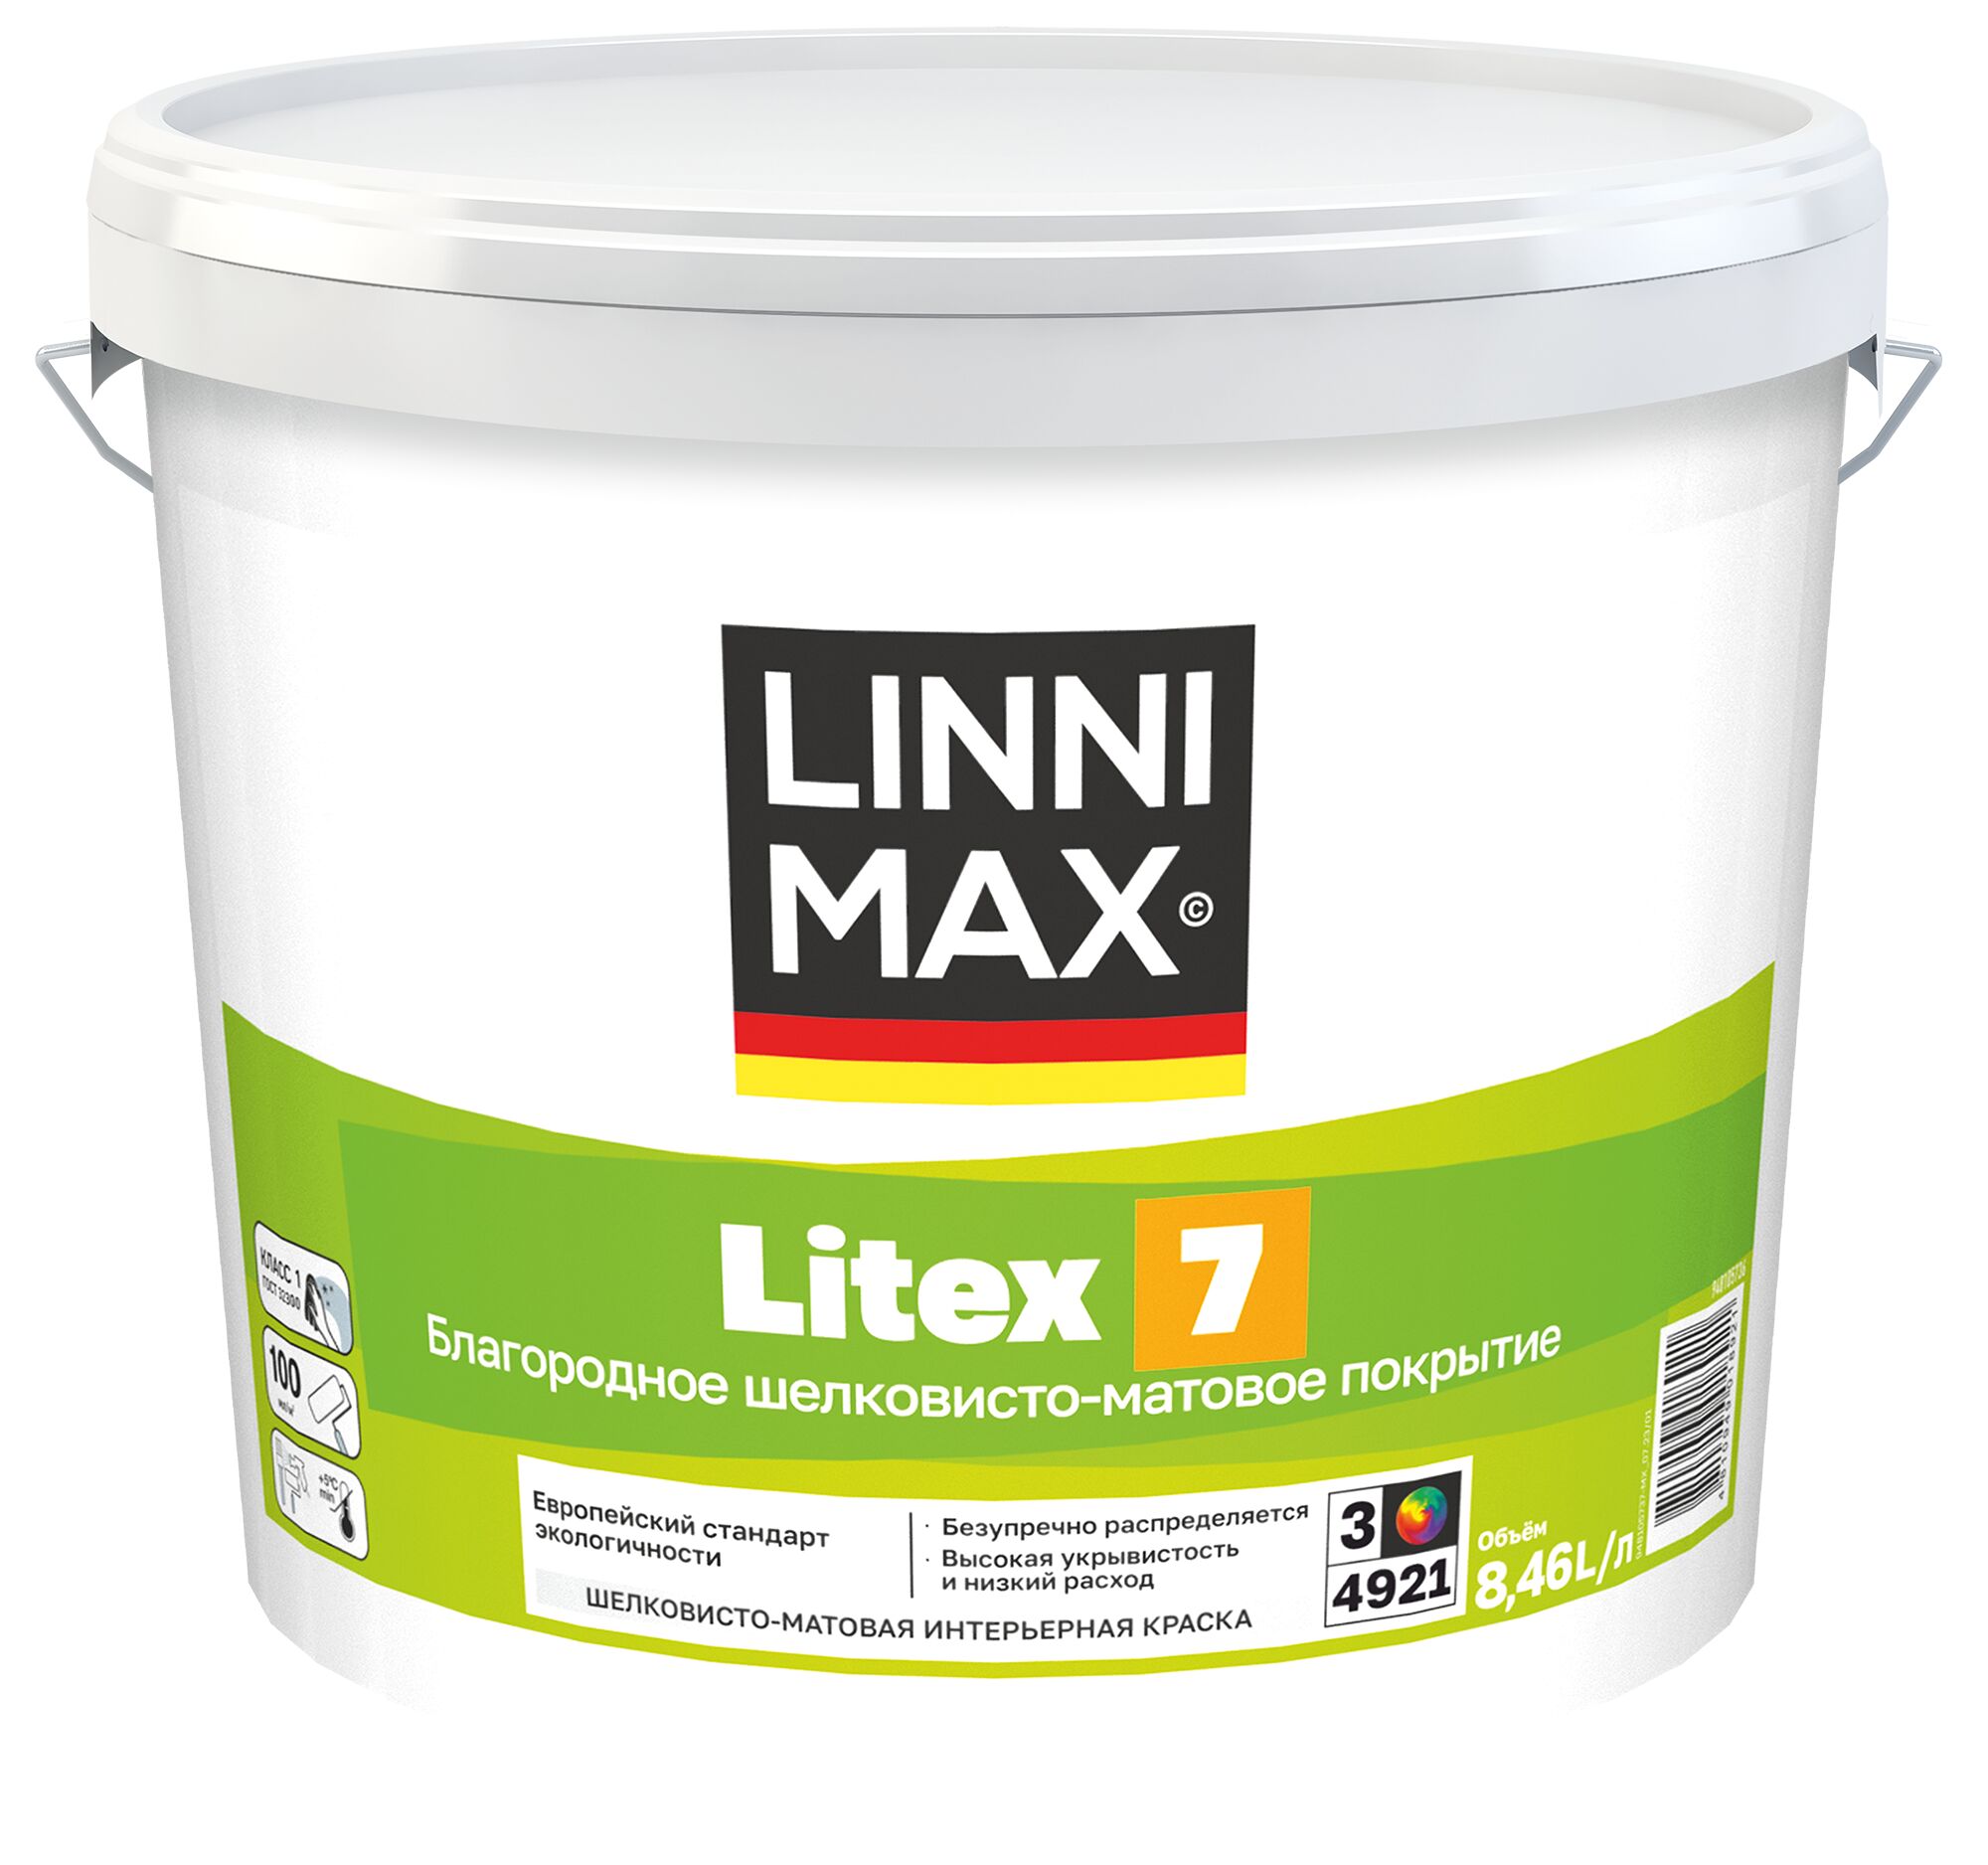 Litex 7 8,46л Краска водно-дисперсионная для внутренних работ База3 LINNIMAX, Litex 7 8,46л Краска водно-дисперсионная для внутренних работ База3 LINNIMAX